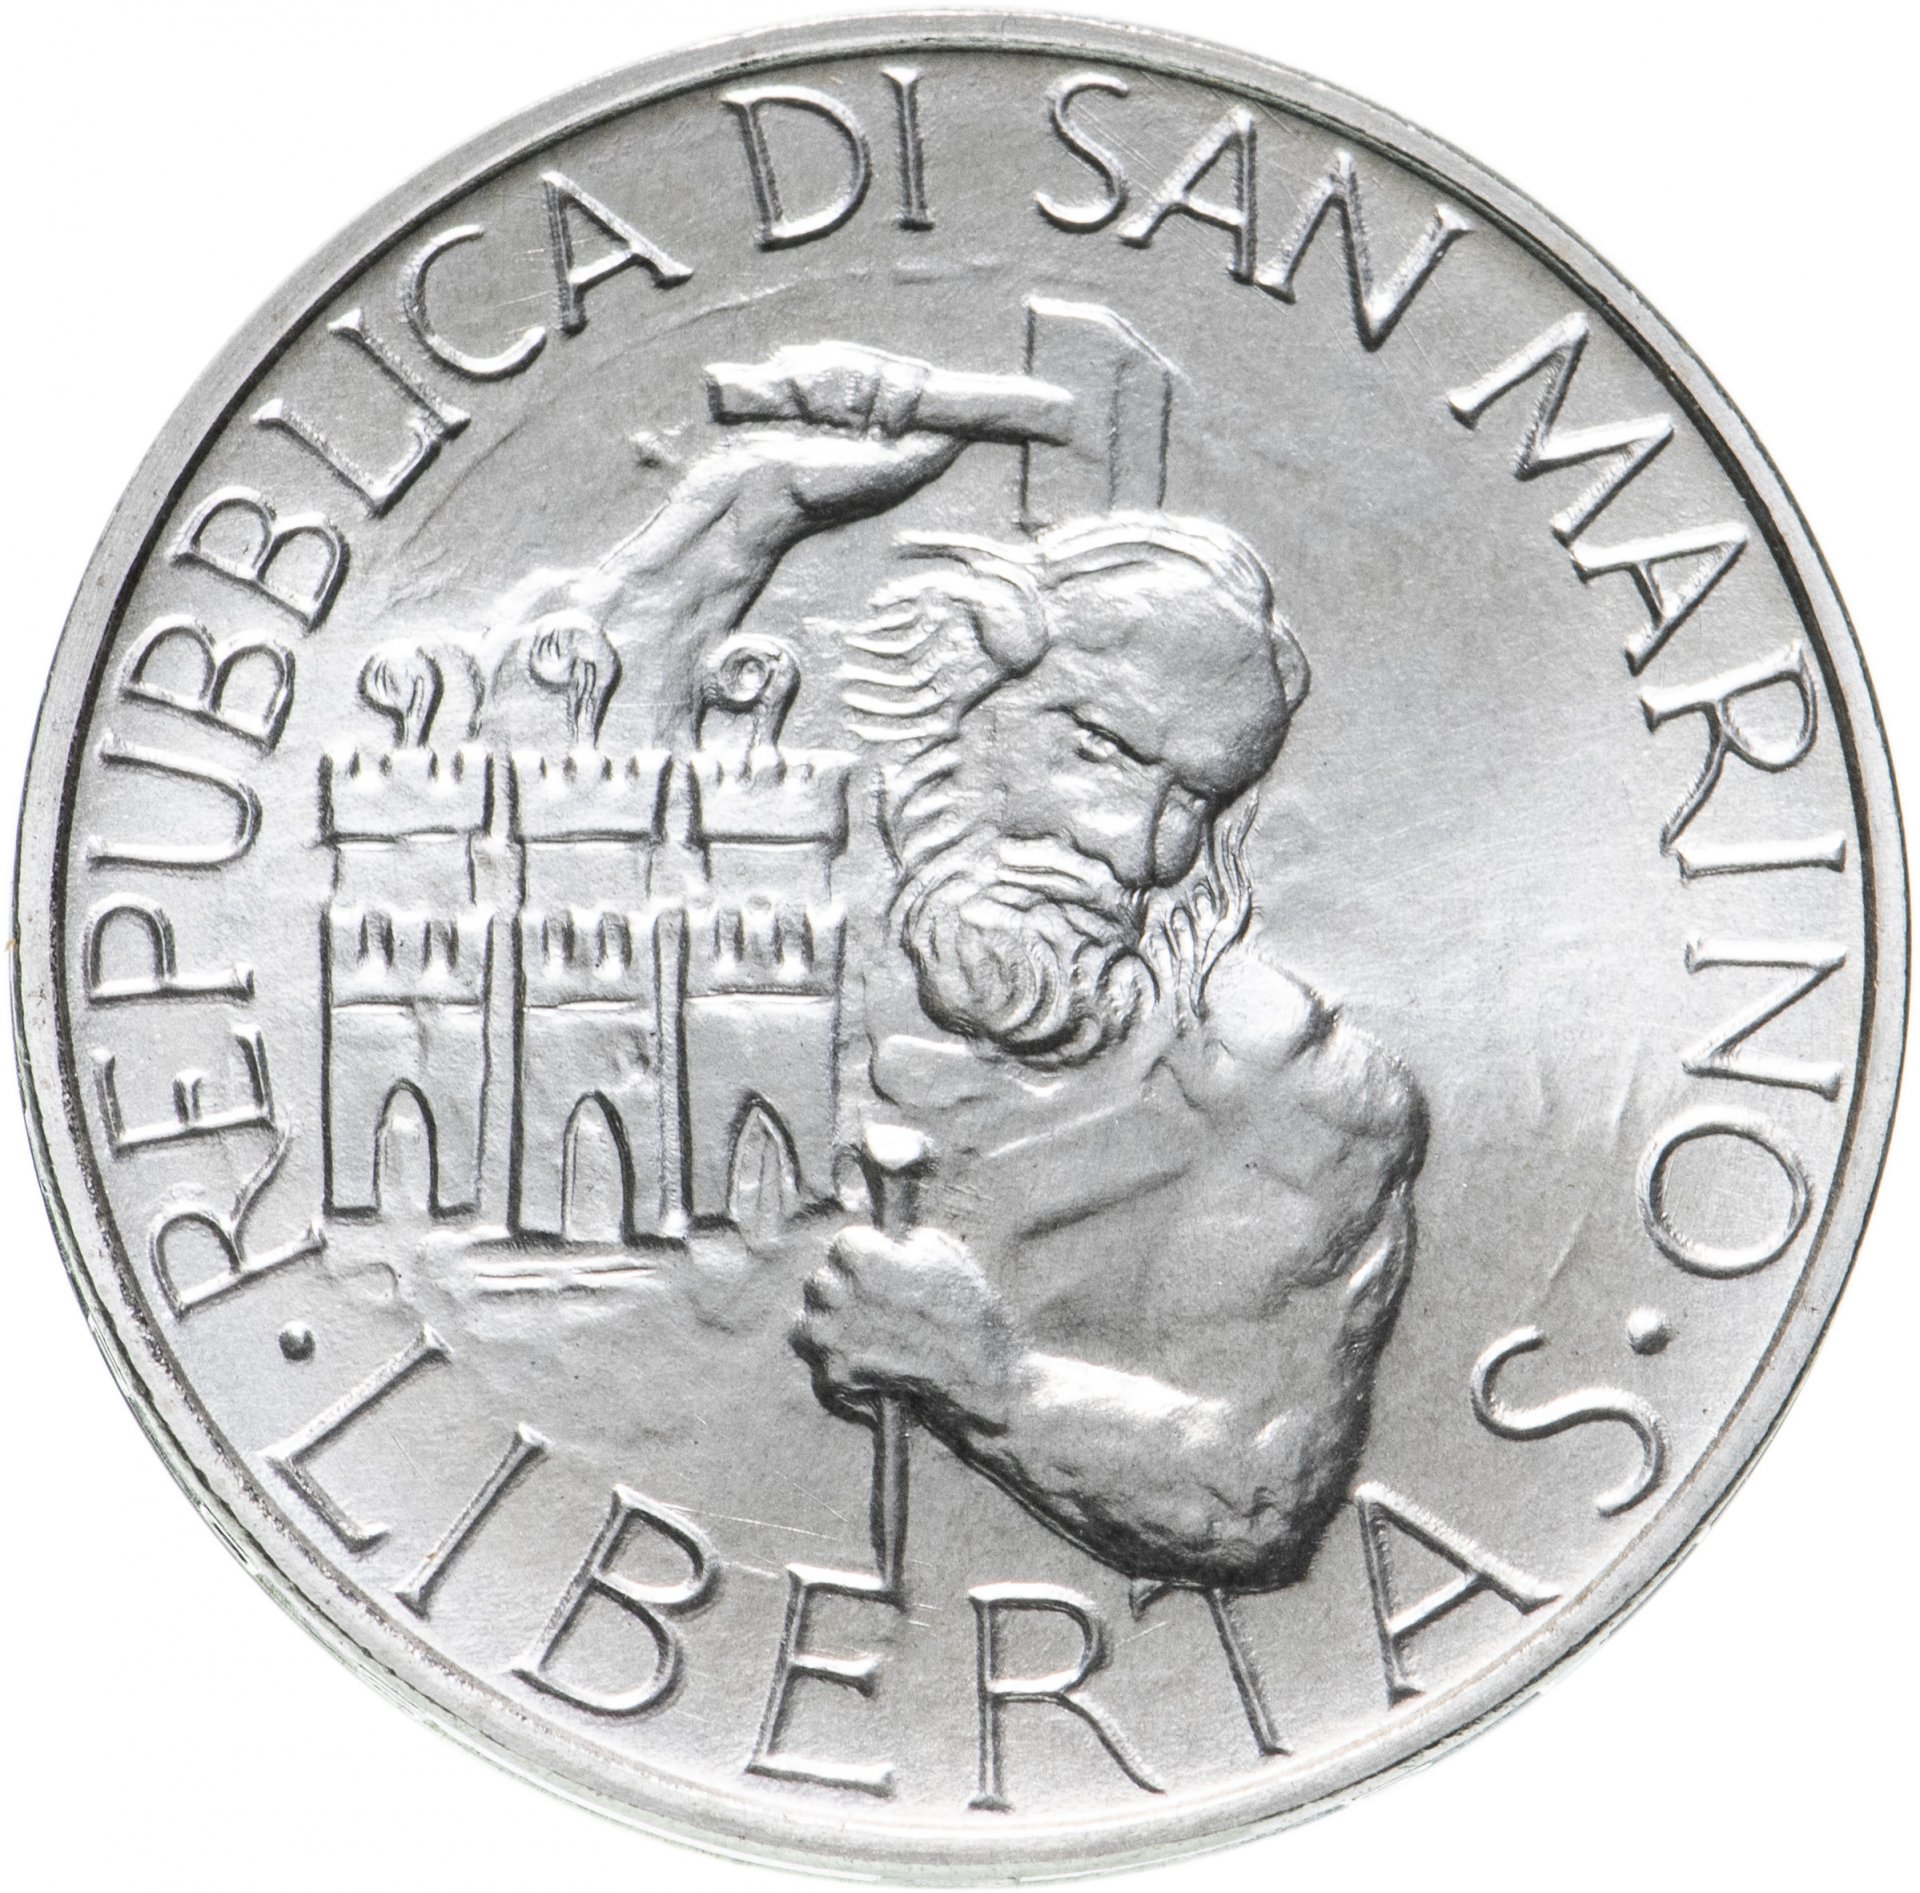 5 тысяч лир. Монеты Сан Марино. 1000 Лир монета. Монеты Сан Марино 500 лир 1994 года. Монета Сан Марино 1000 лир. Серебро.Бах.